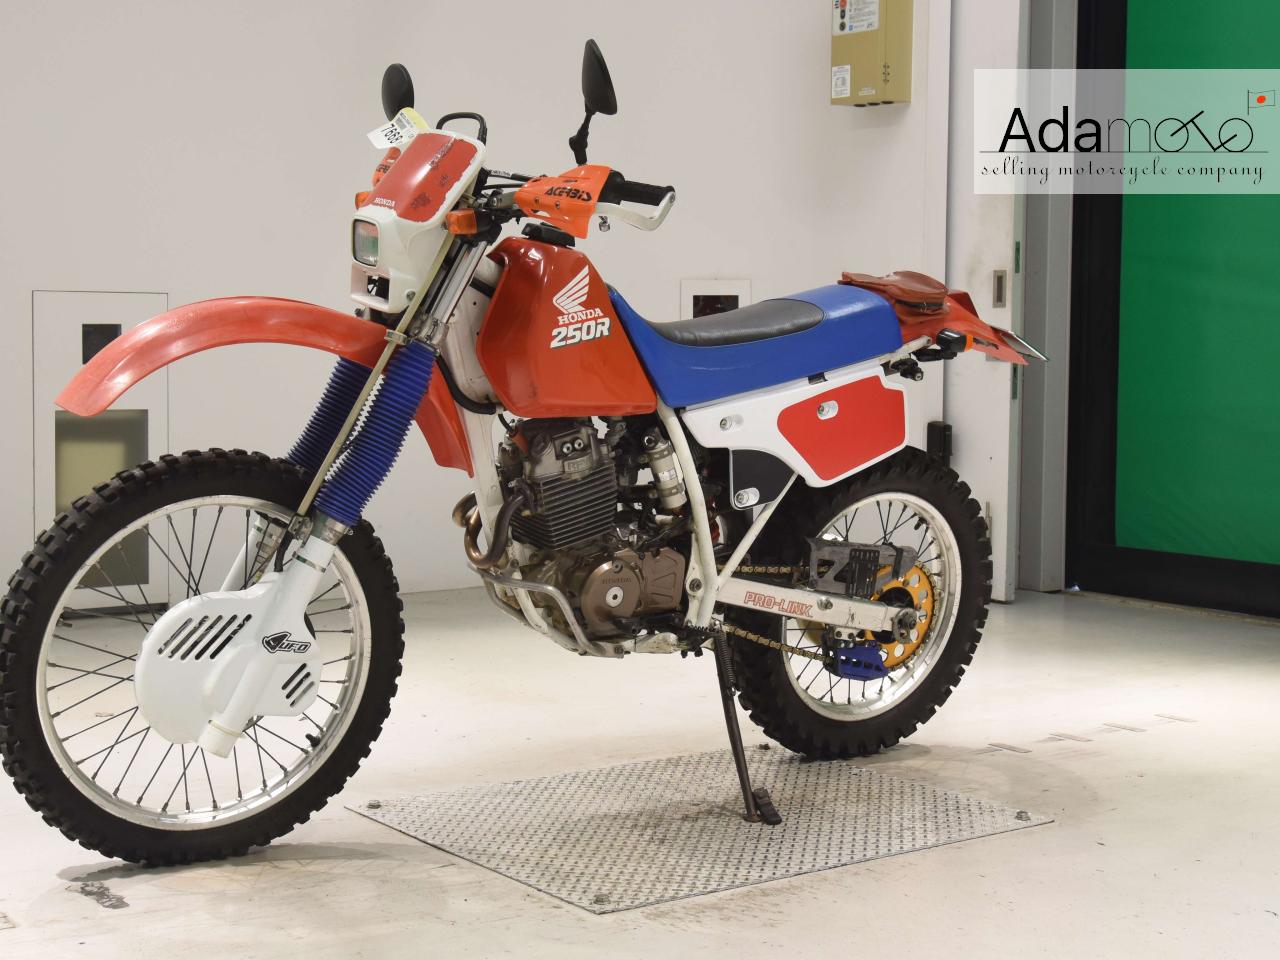 Honda XLR250R 3 - Adamoto - Motorcycles from Japan